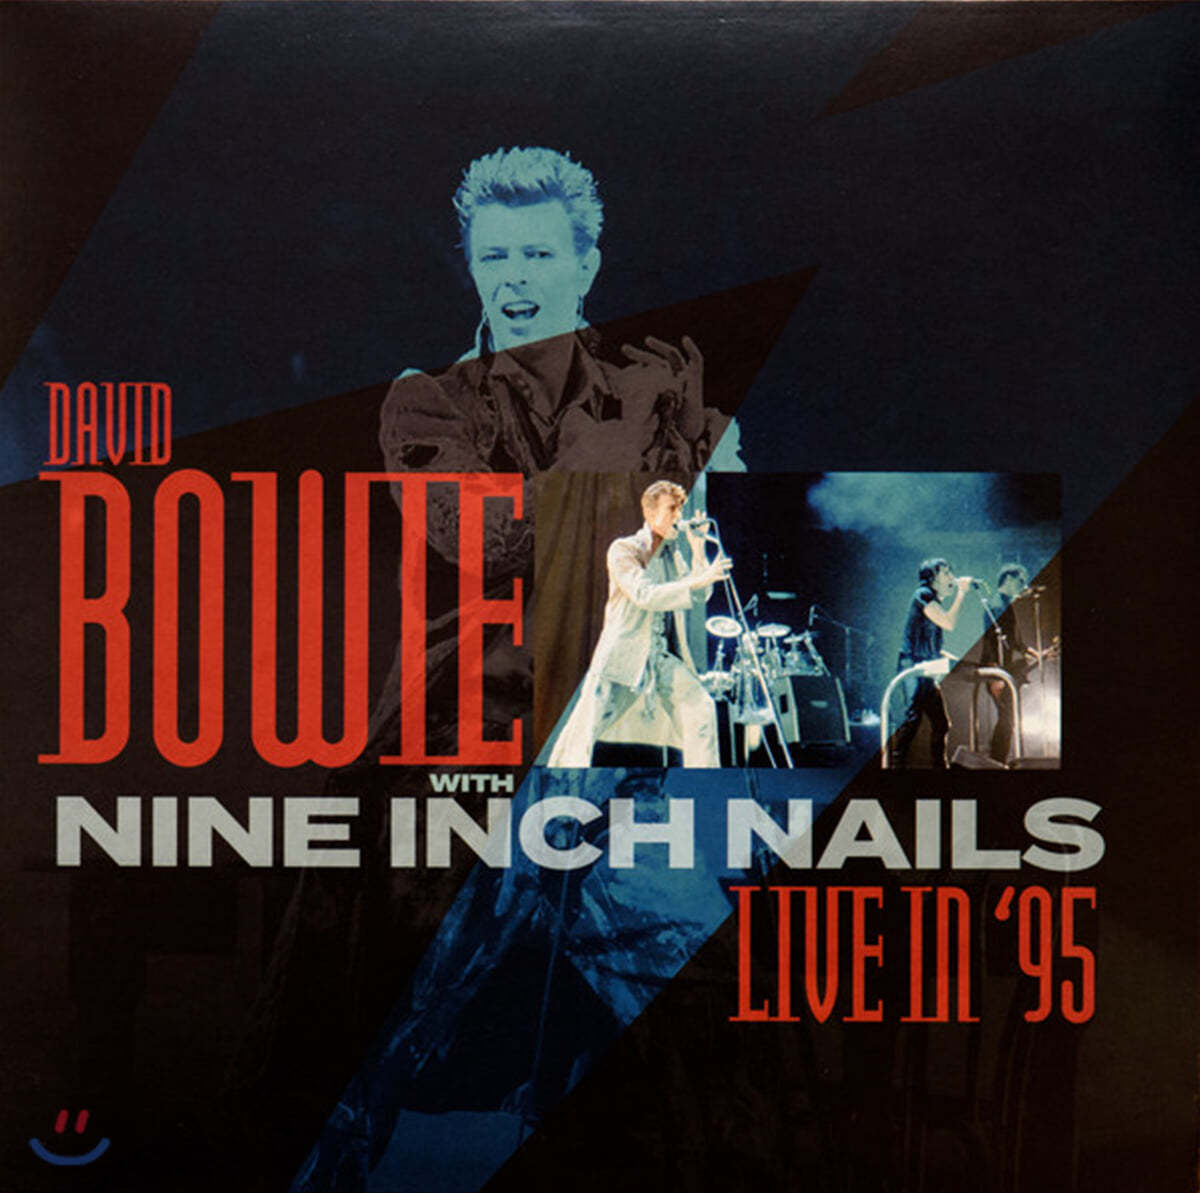 David Bowie With Nine Inch Nails (데이빗 보위 위드 나인 인치 네일스) - Live In &#39;95 [LP]